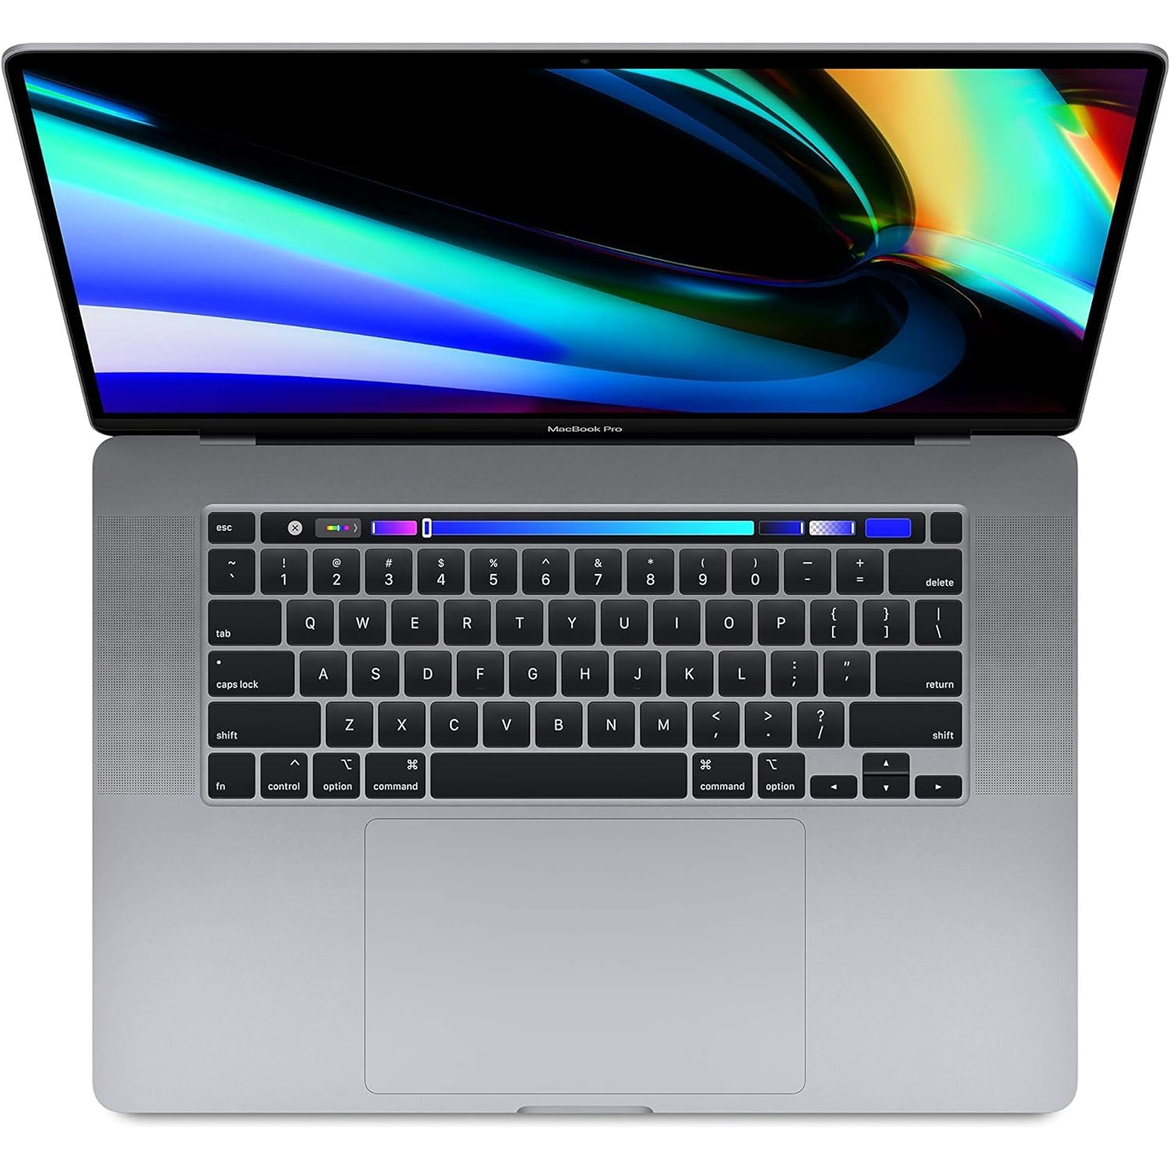 MacBook Pro 16-inch Laptop 2.6GHz 6-Core i7 16GB RAM 512GB SSD - Silver